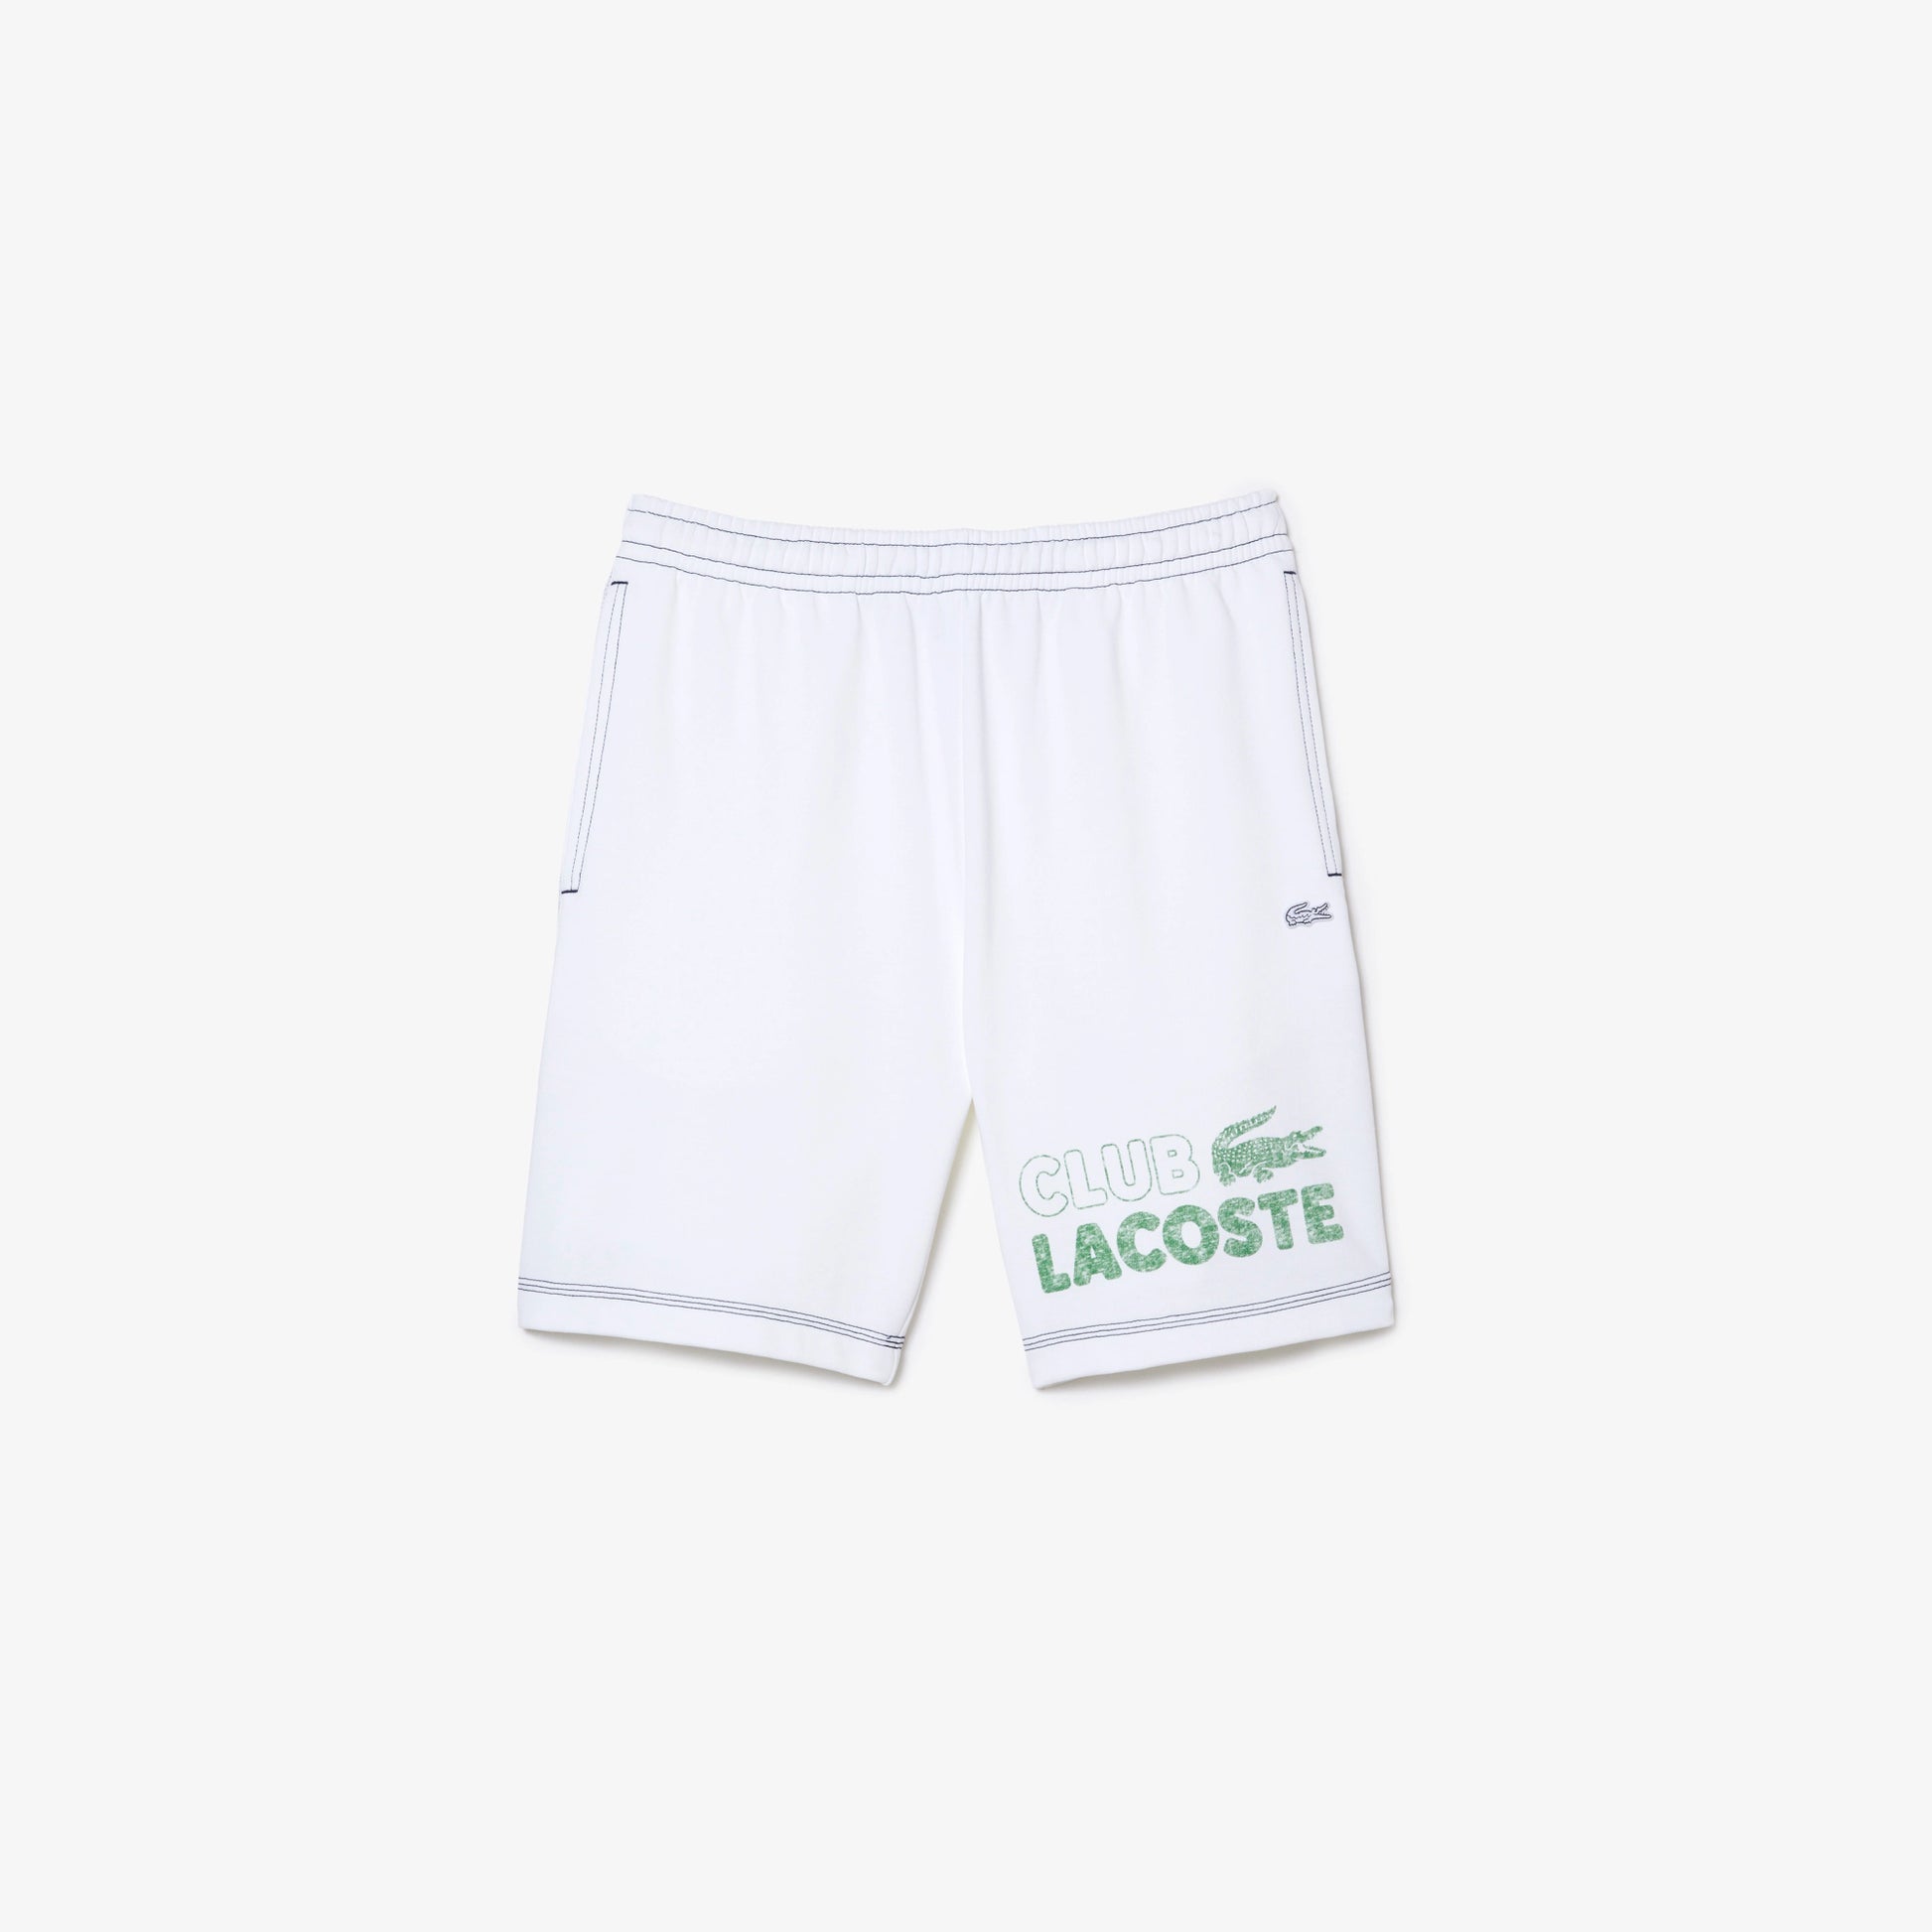 Lacoste - Vintage Print Organic Cotton Set - White – Todays Man Store